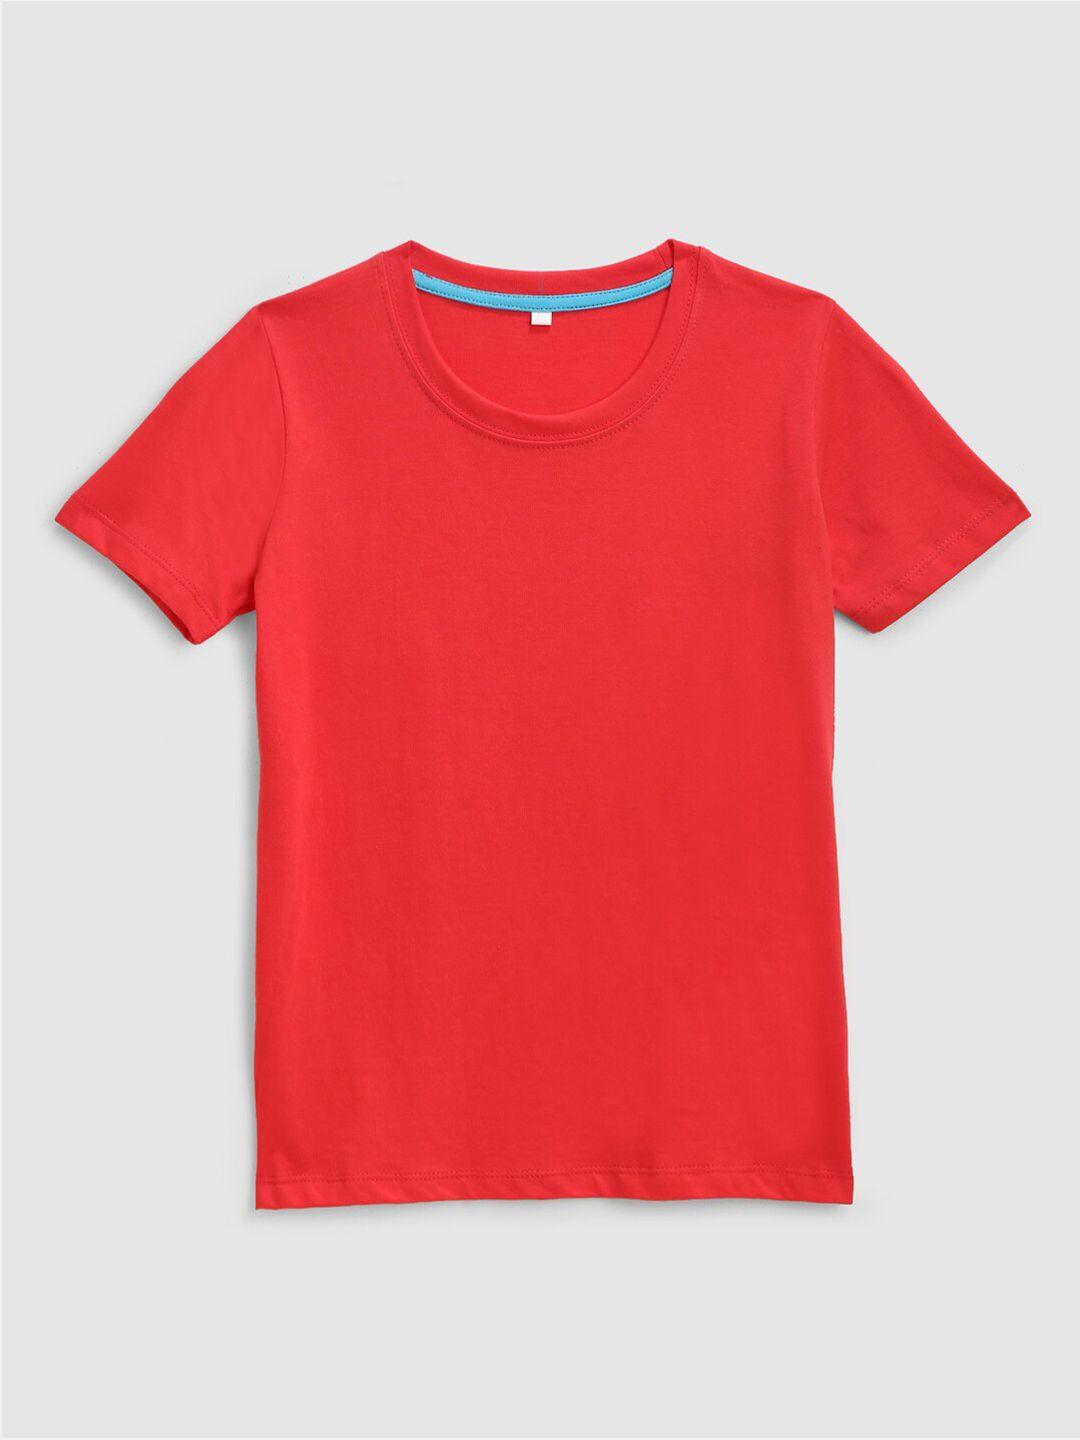 kidscraft boys red solid cotton t-shirt